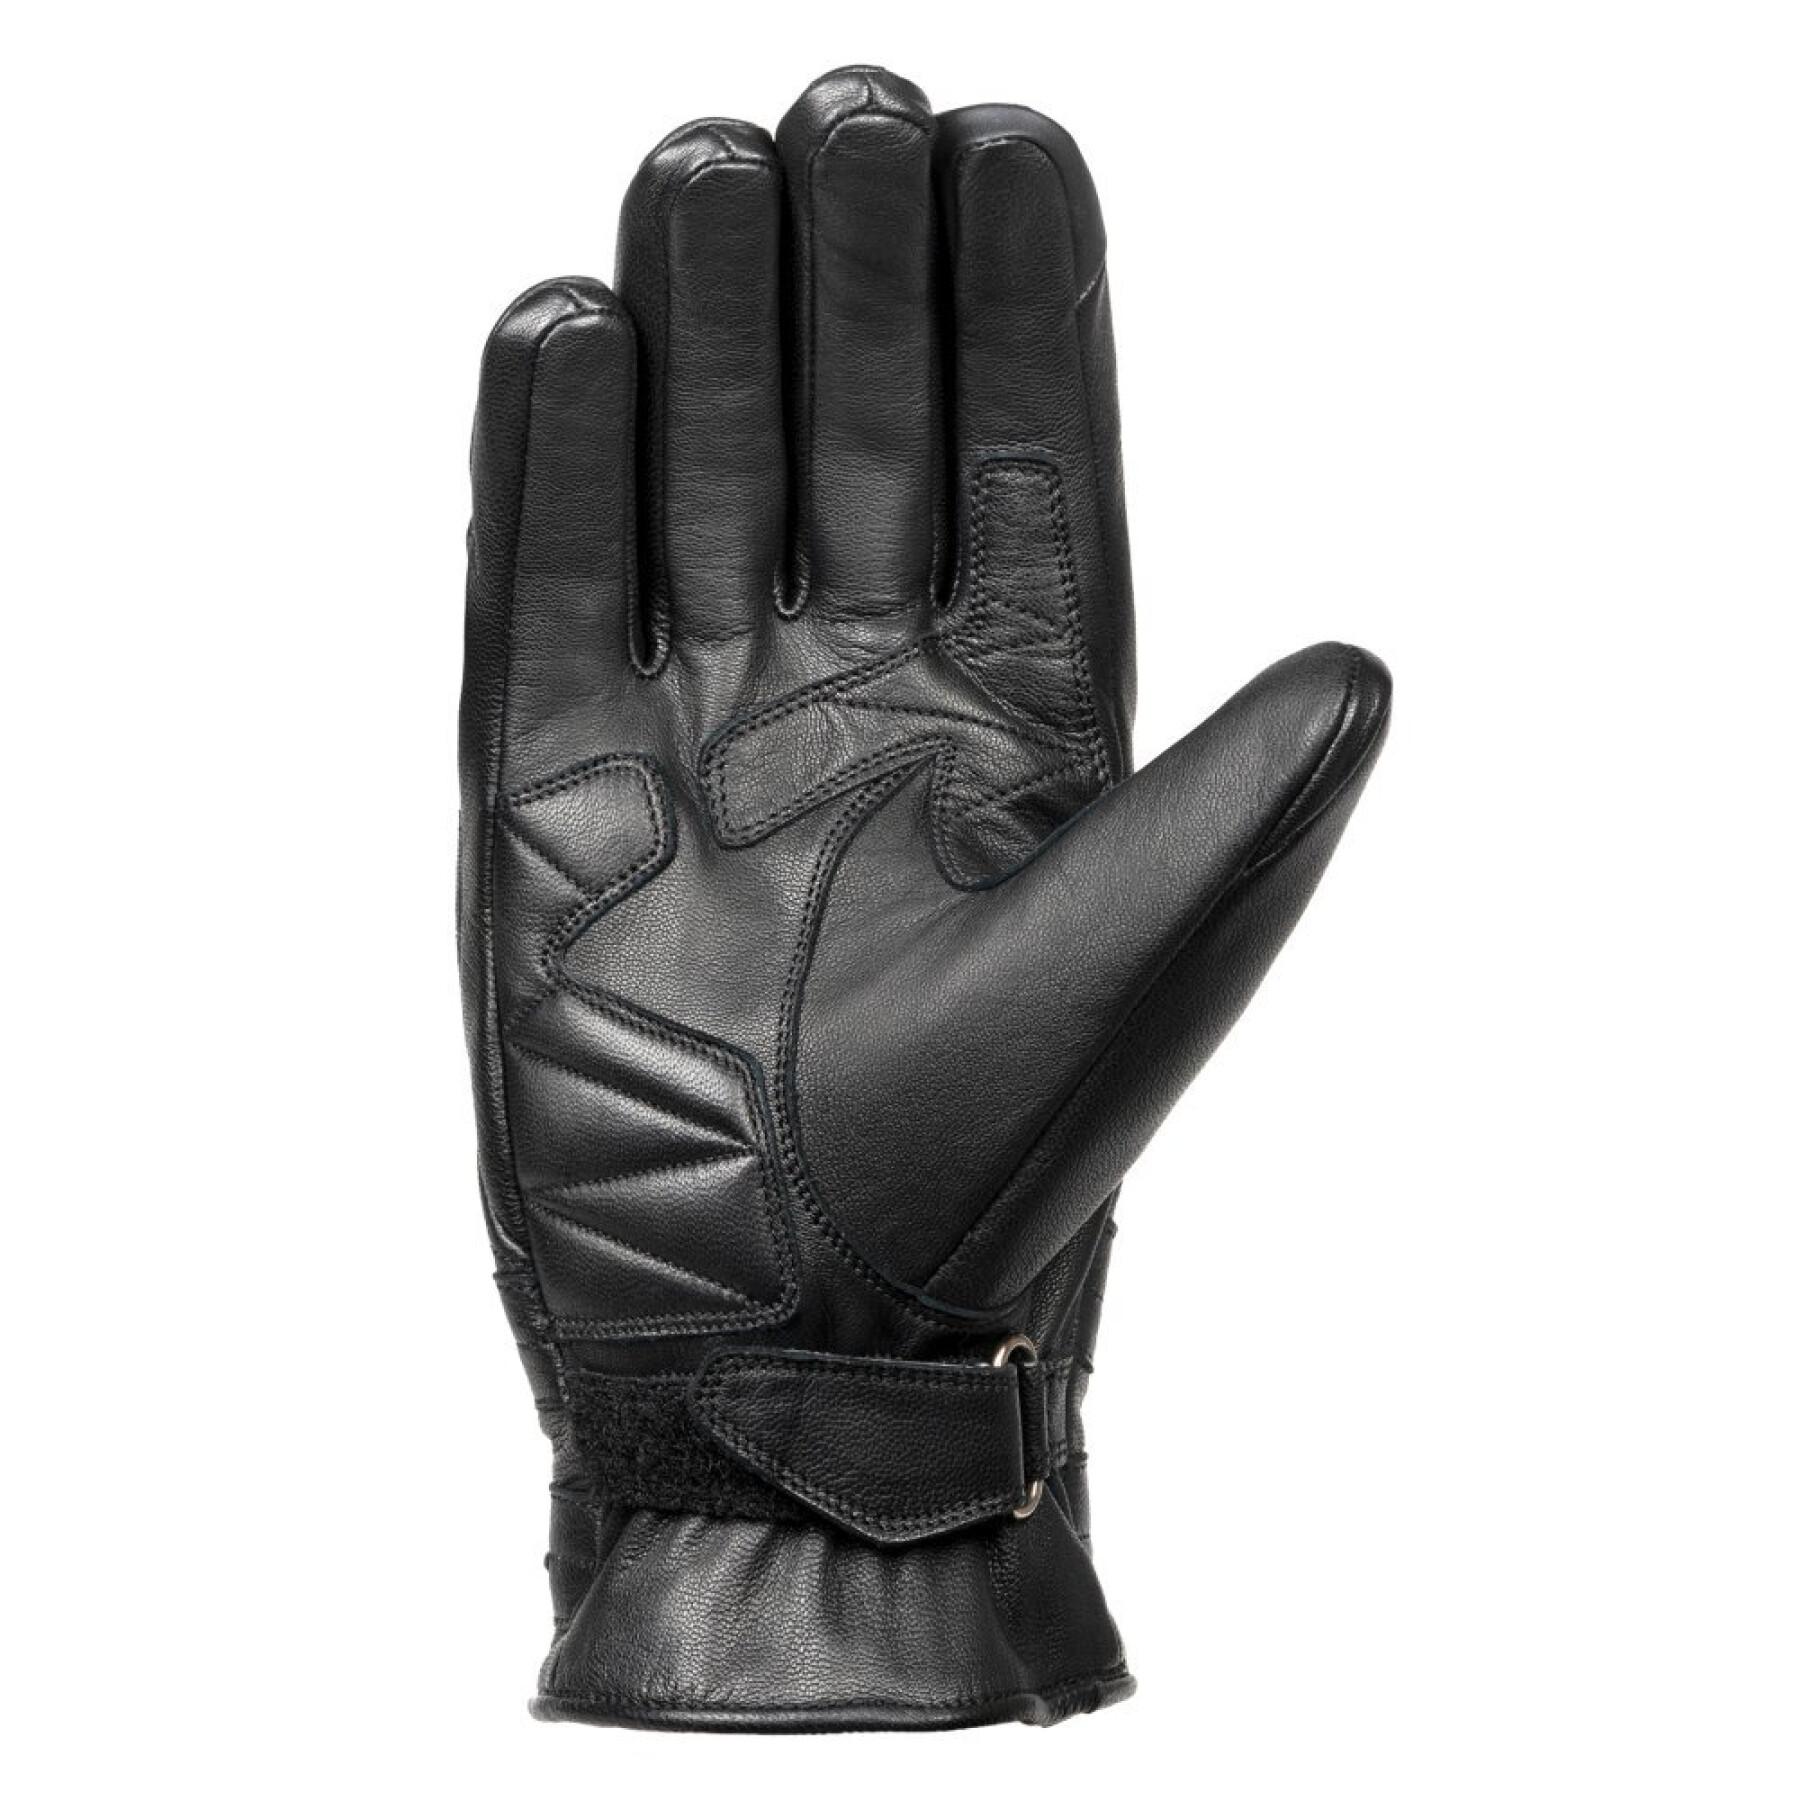 Winter motorcycle gloves Ixon Pro Royal